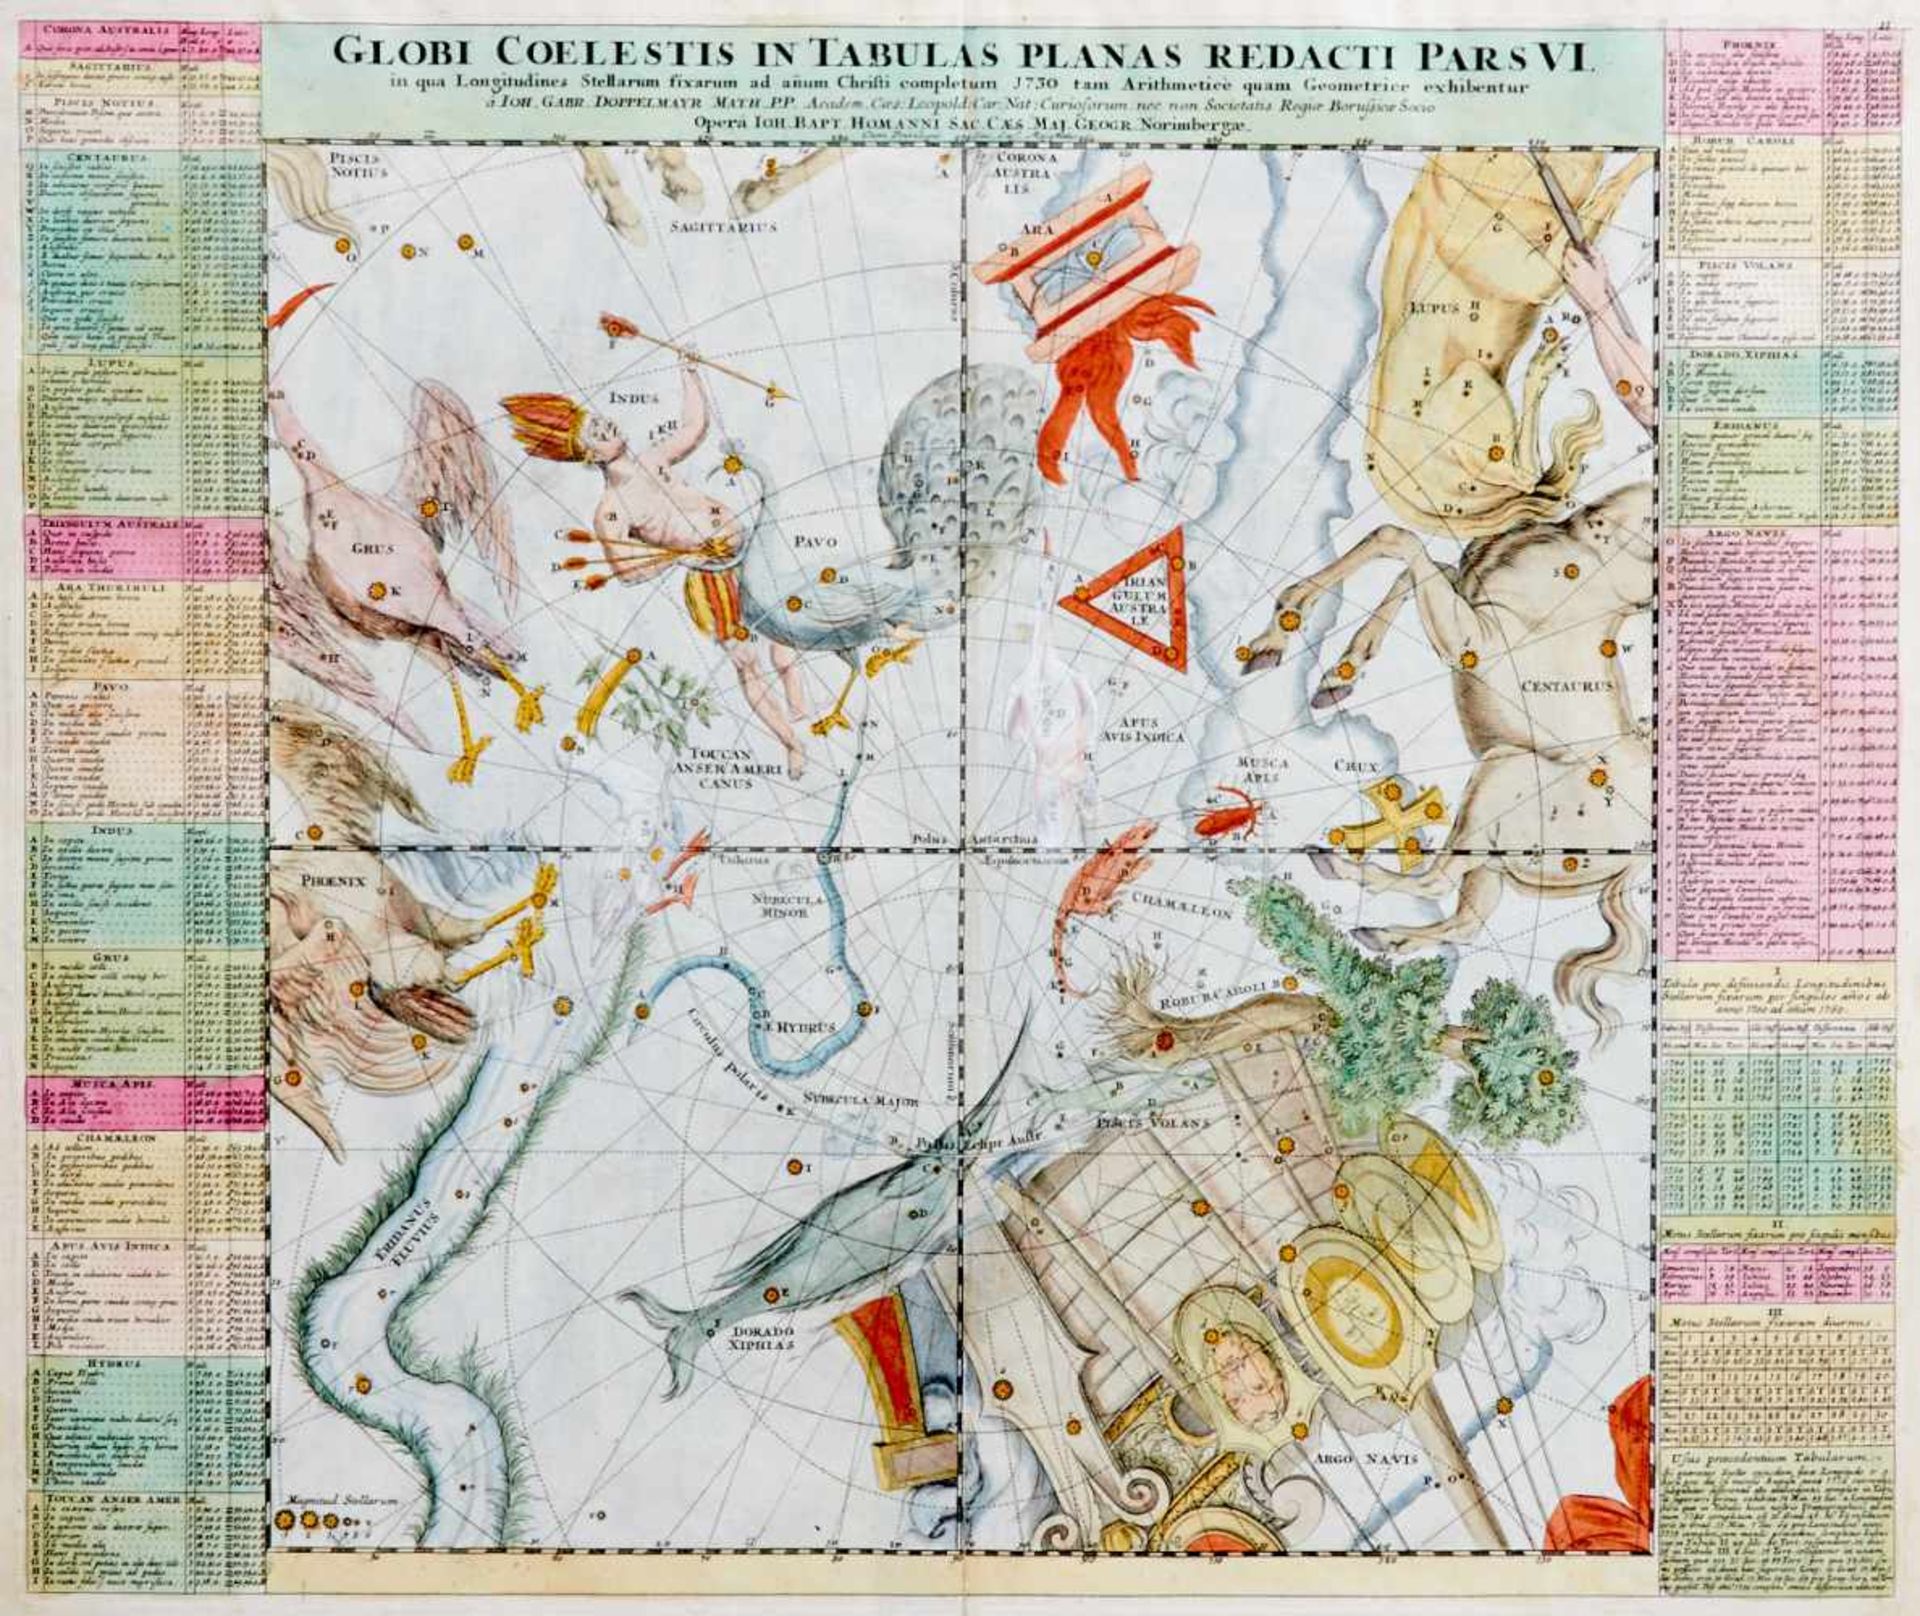 Himmelskarte -Globi Coelestis in tabulas planas redacti pars II - "Globi Coelestis ... pars VI".